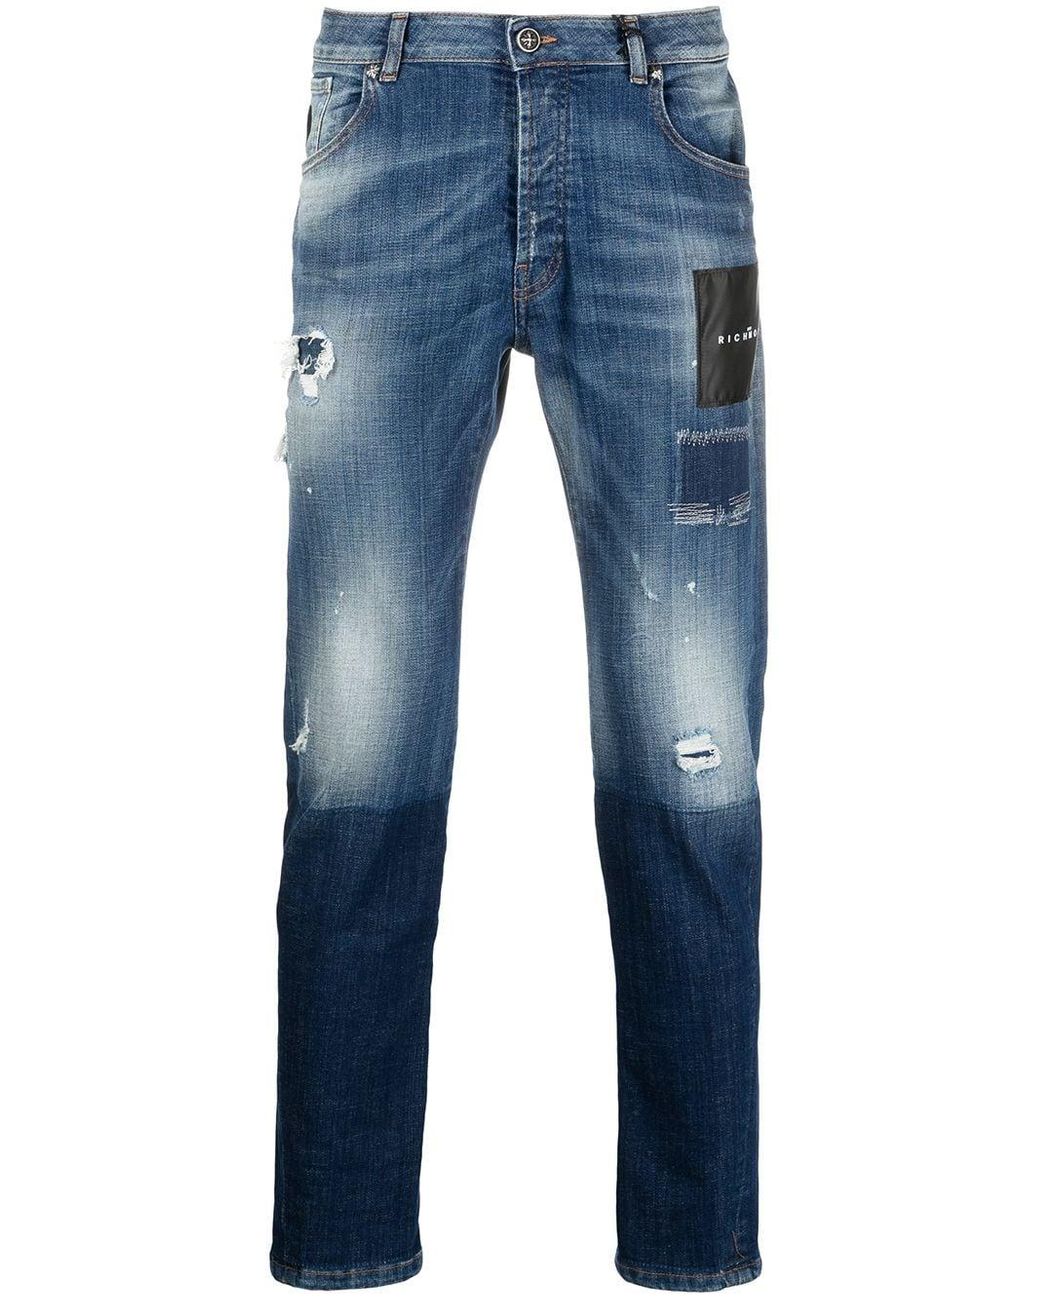 John Richmond Denim Distressed Slim-fit Jeans in Blue for Men - Lyst